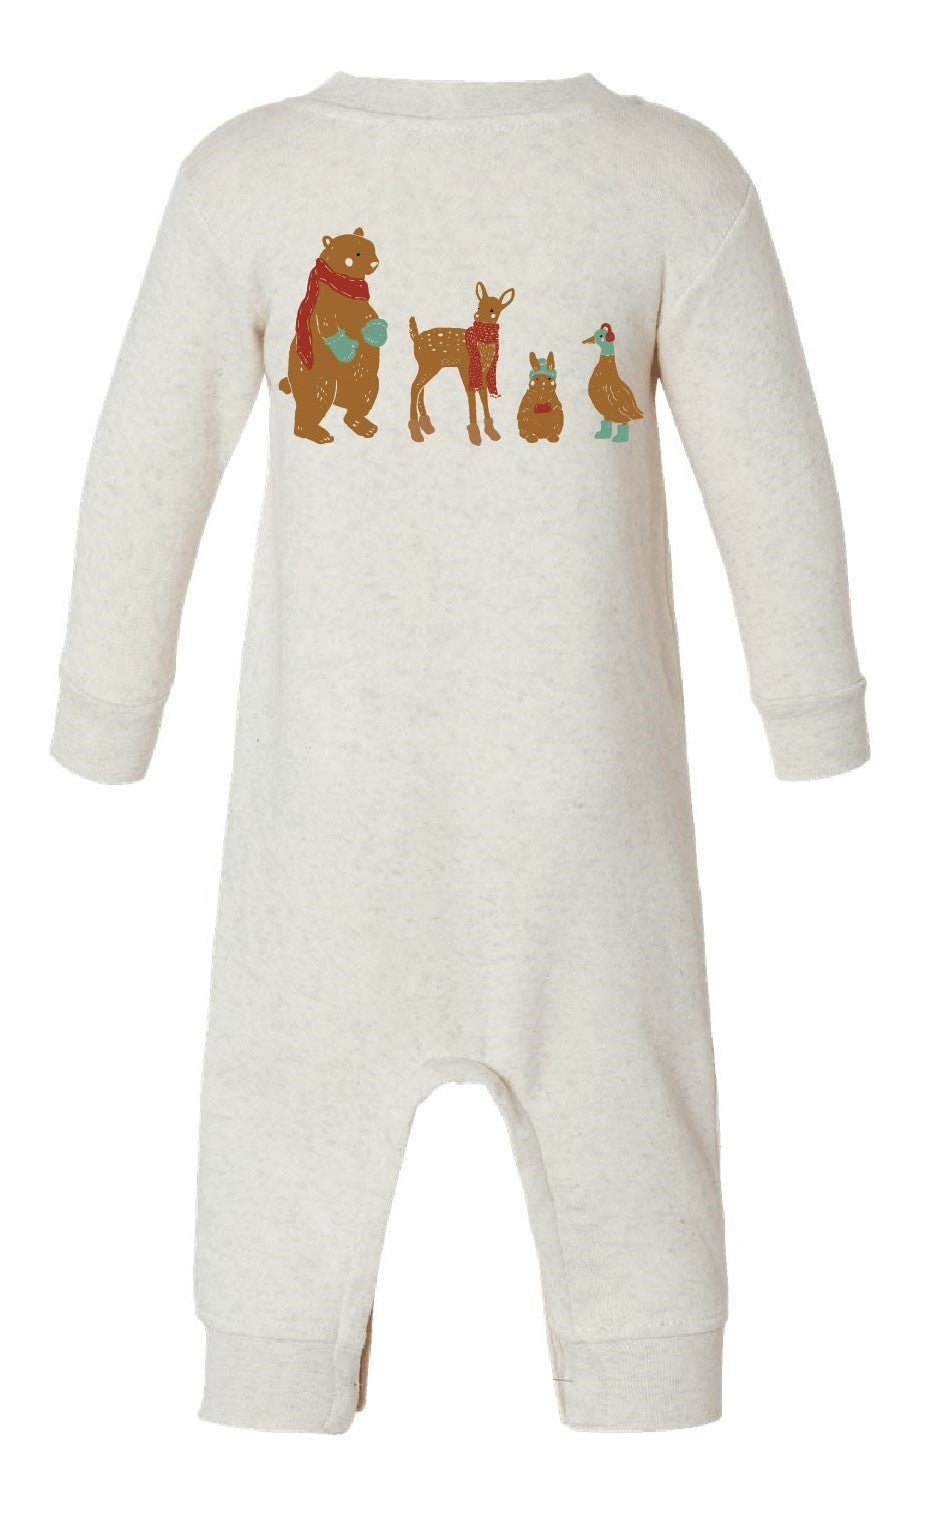 Winter Animals - Infant Long Sleeve Sweatsuit Onesie